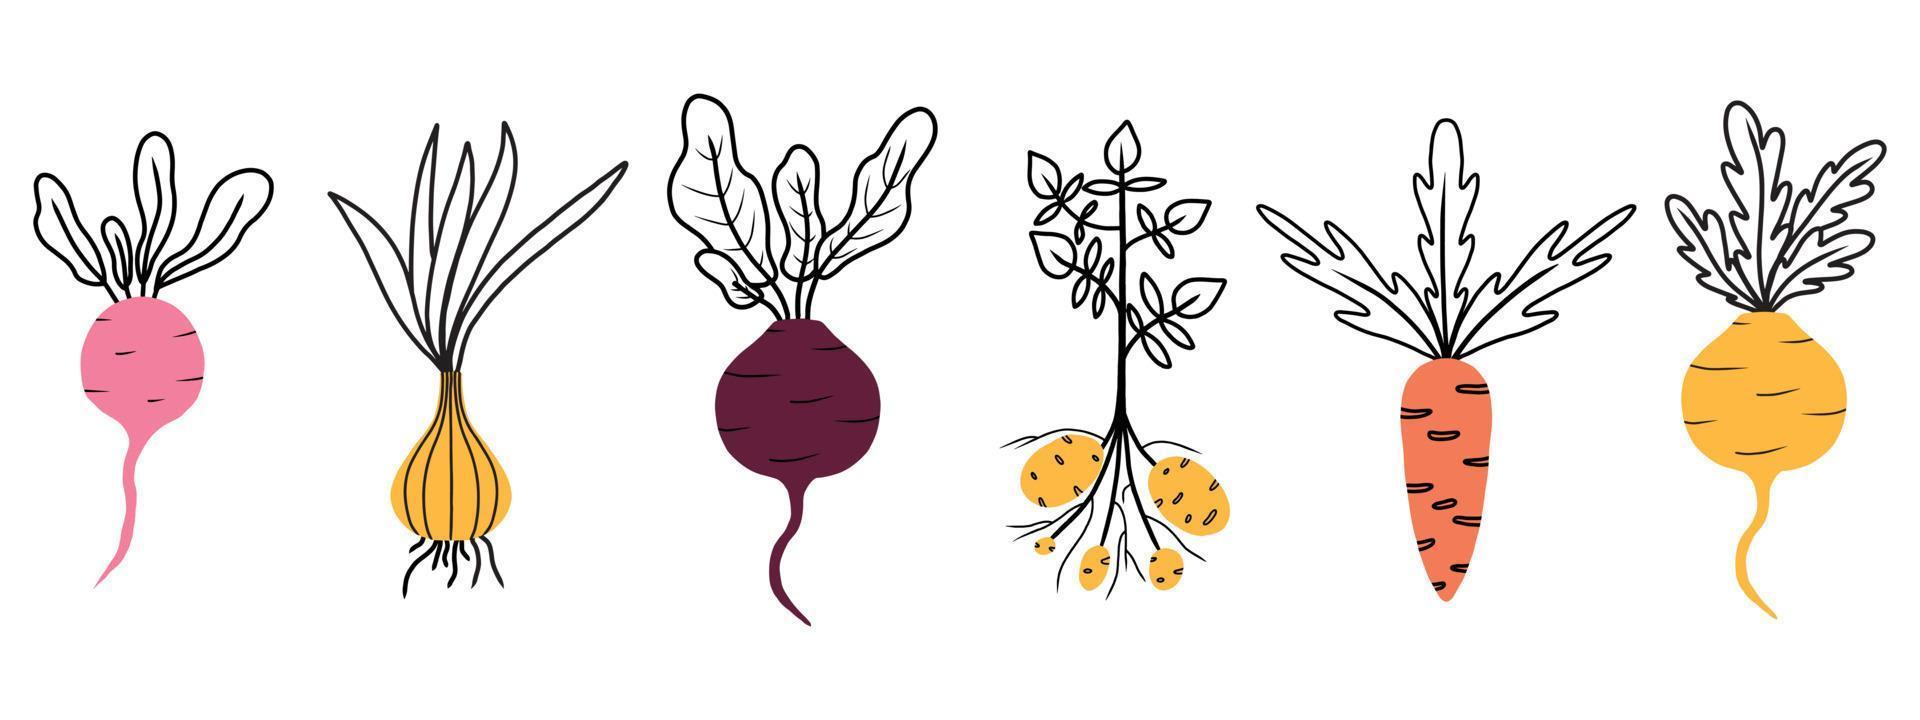 Illustration of a root vegetable. Onion, radish. beets, turnips, carrots, potatoes. Set of vegetables. vector